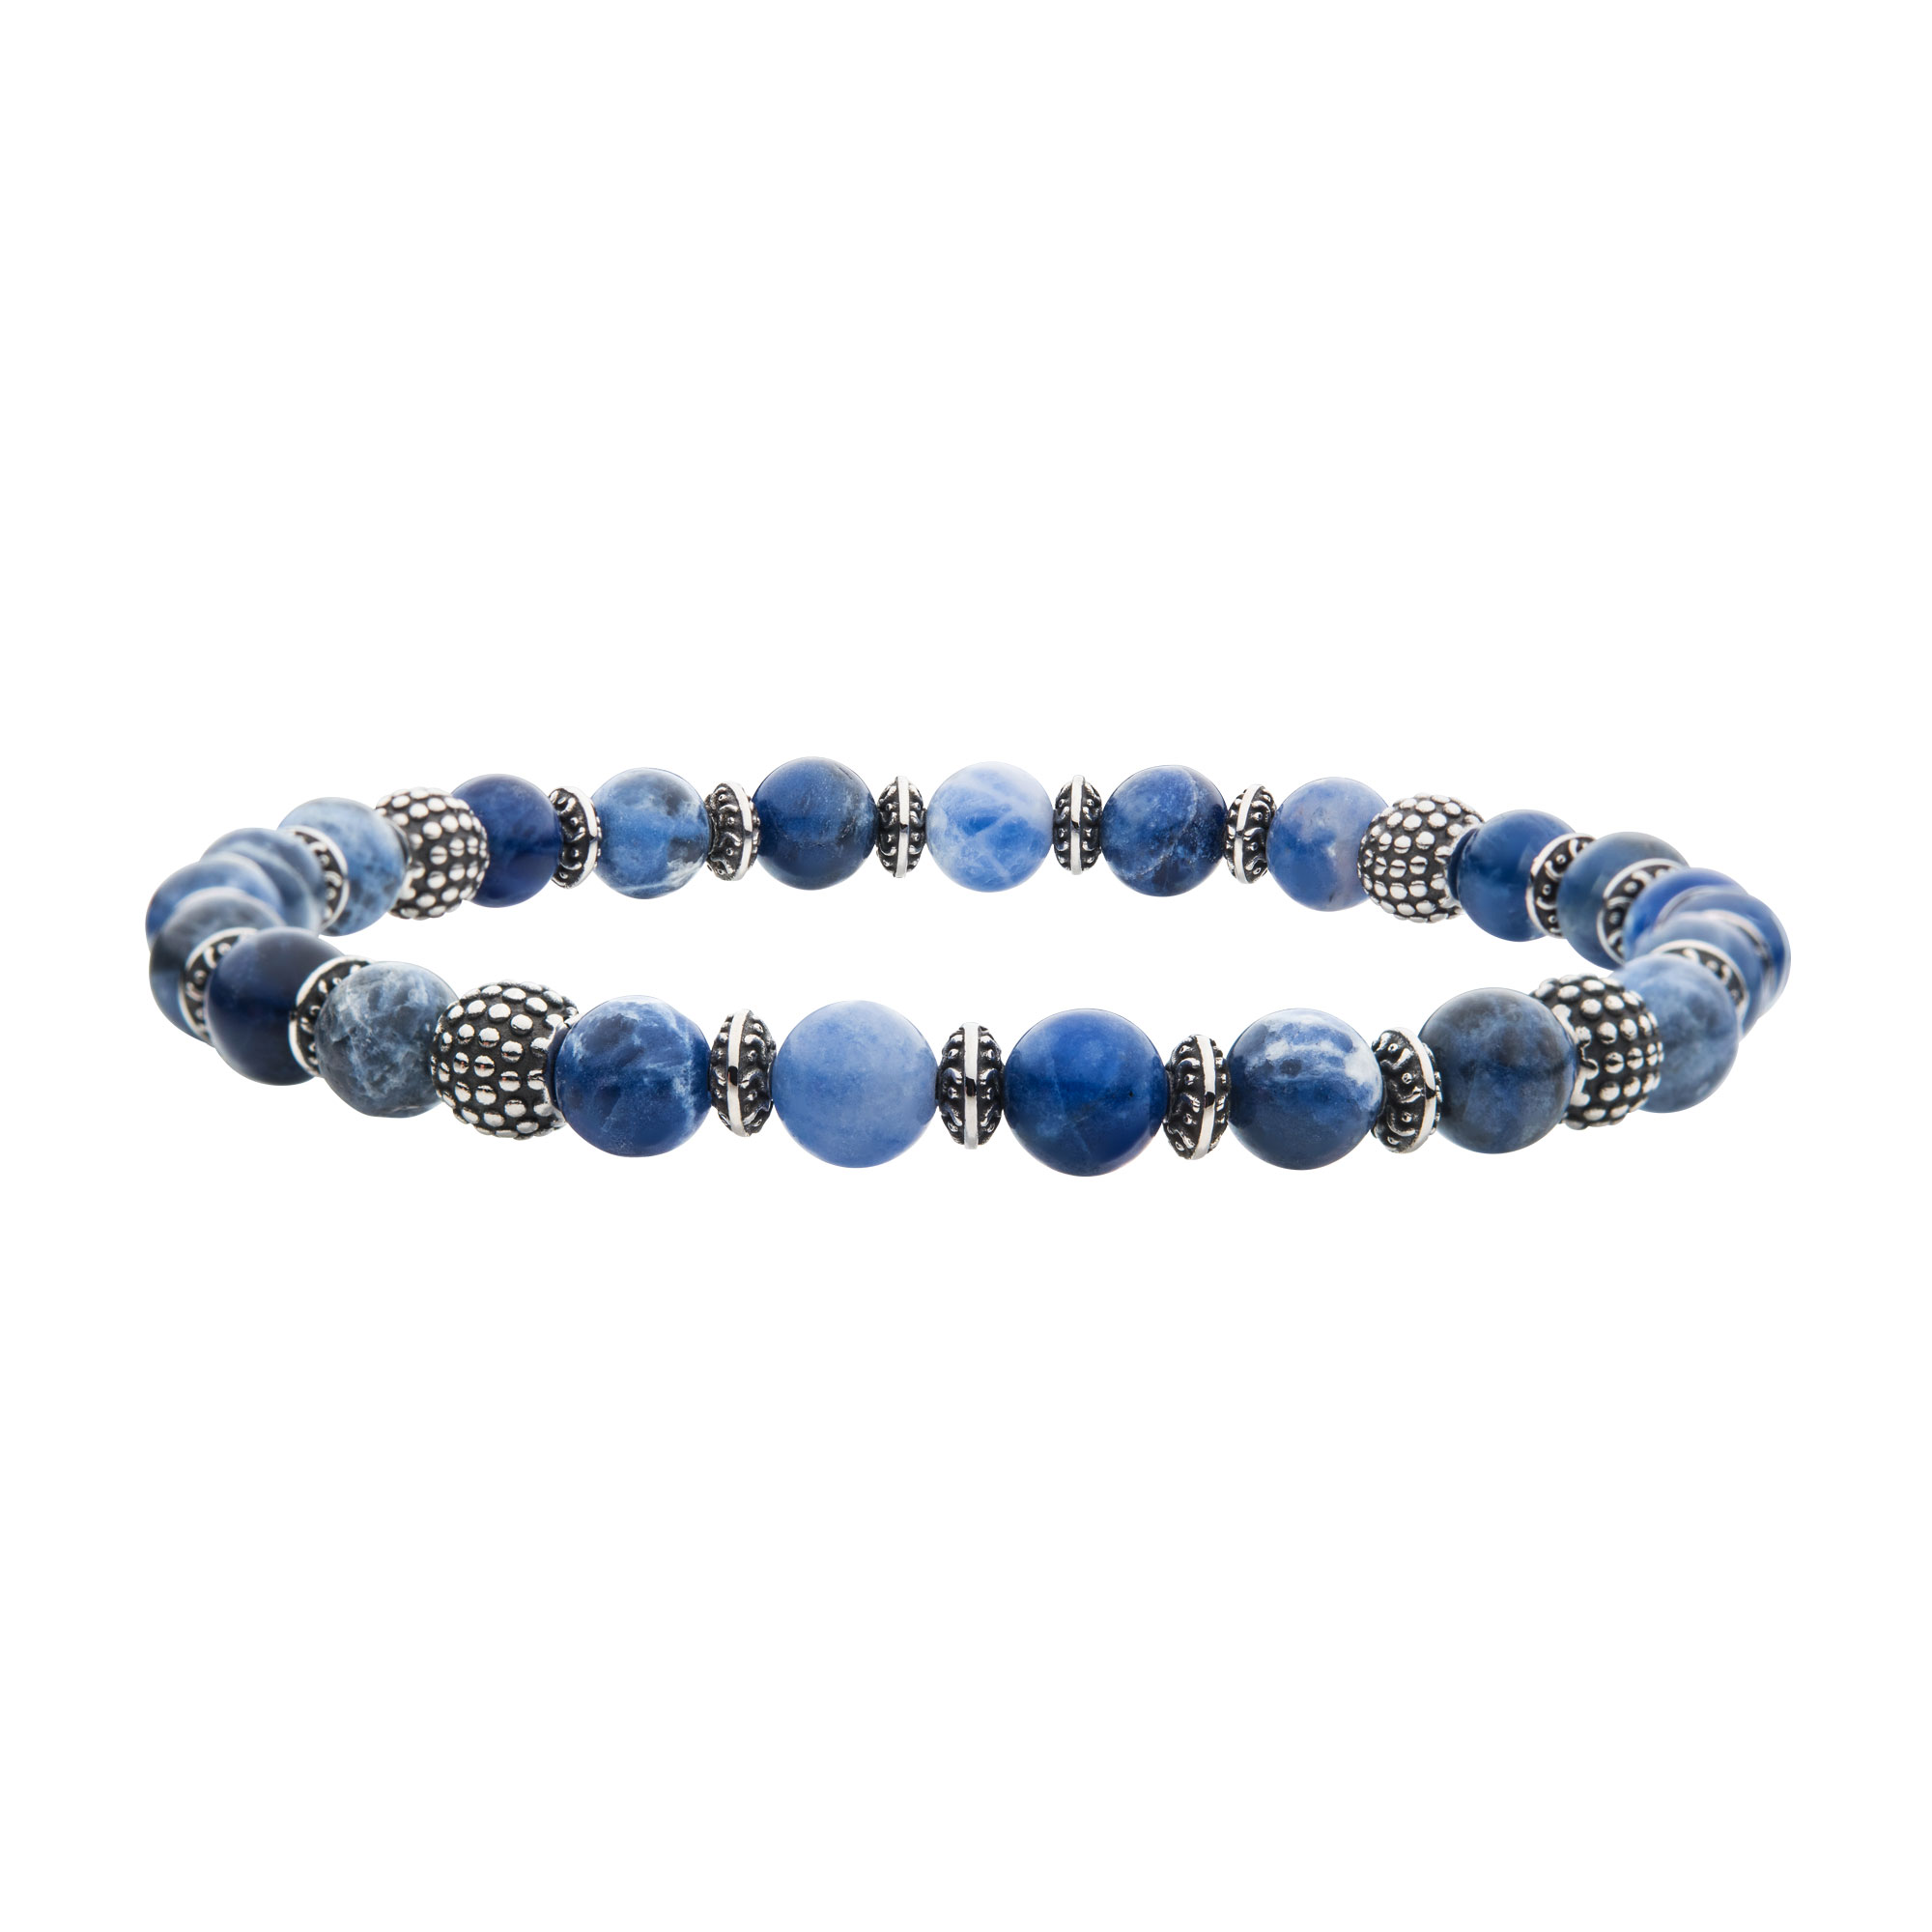 Blue Sodalite Stones with Black Oxidized Beads Bracelet Lewis Jewelers, Inc. Ansonia, CT